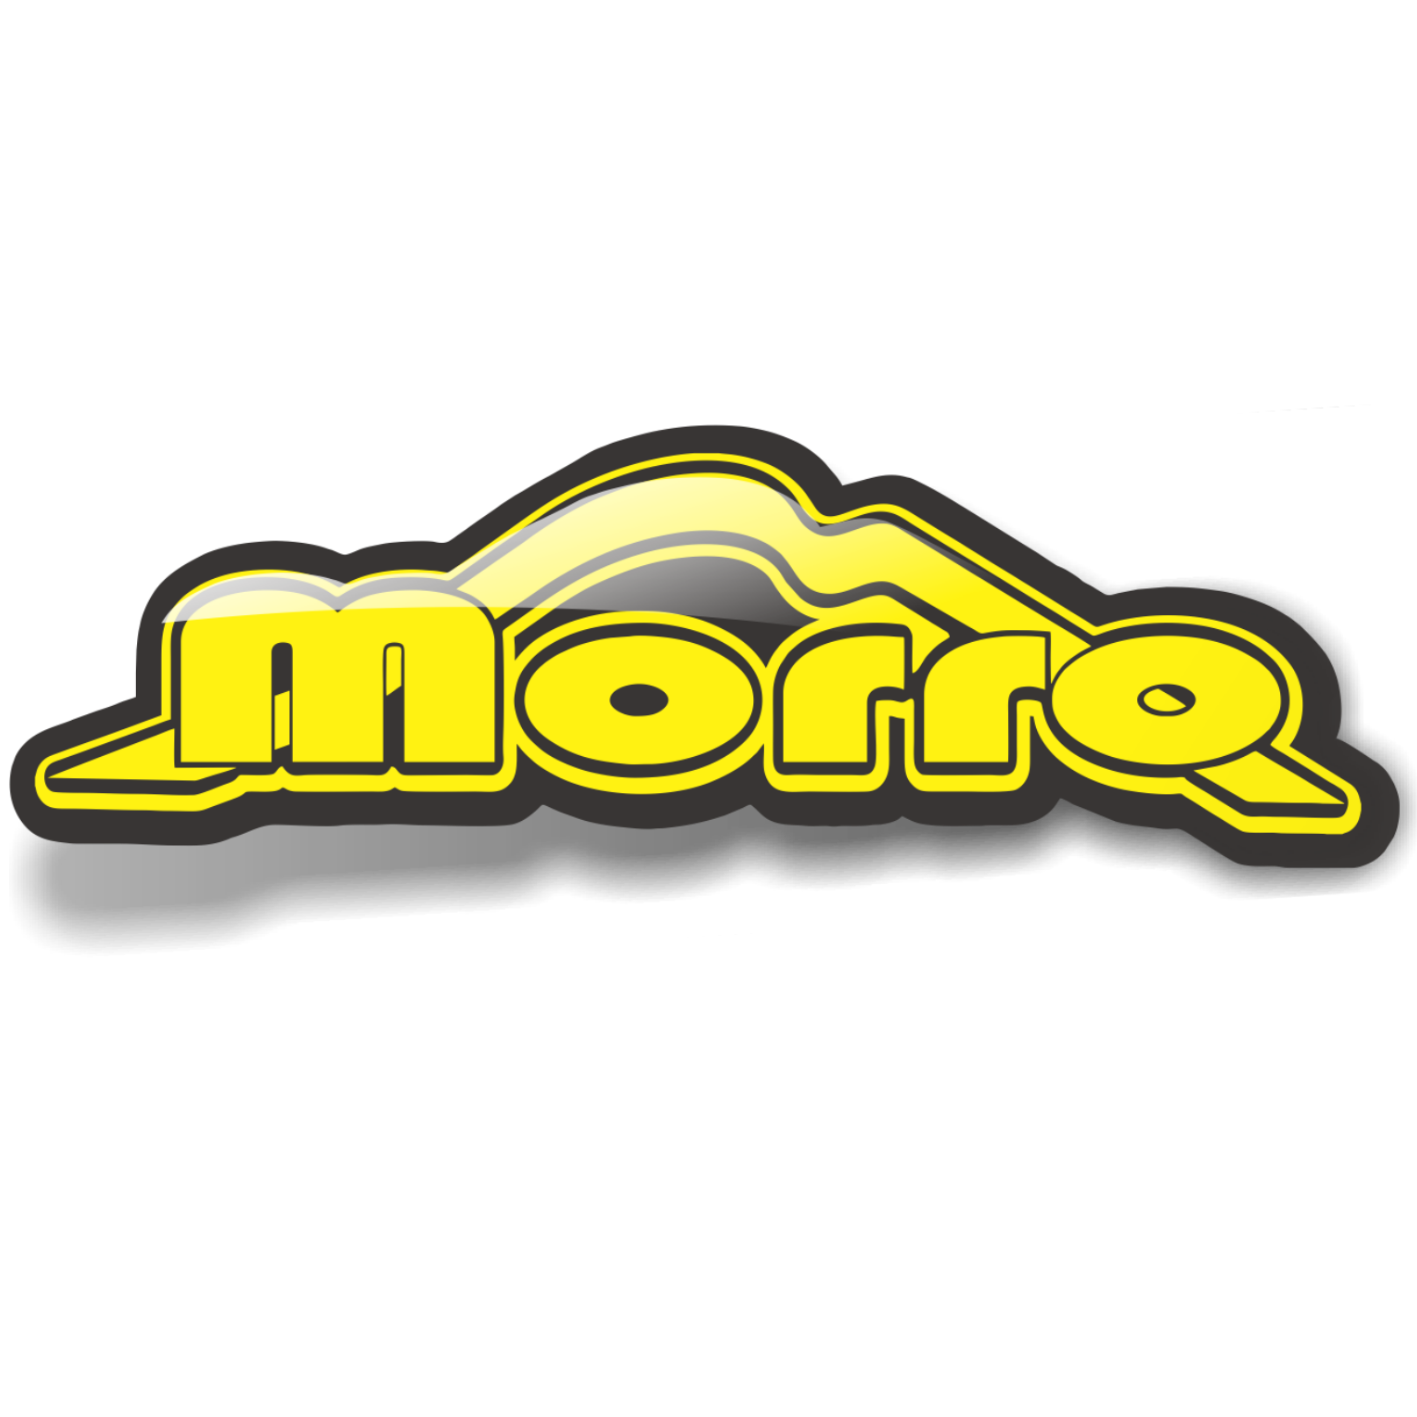 Morro